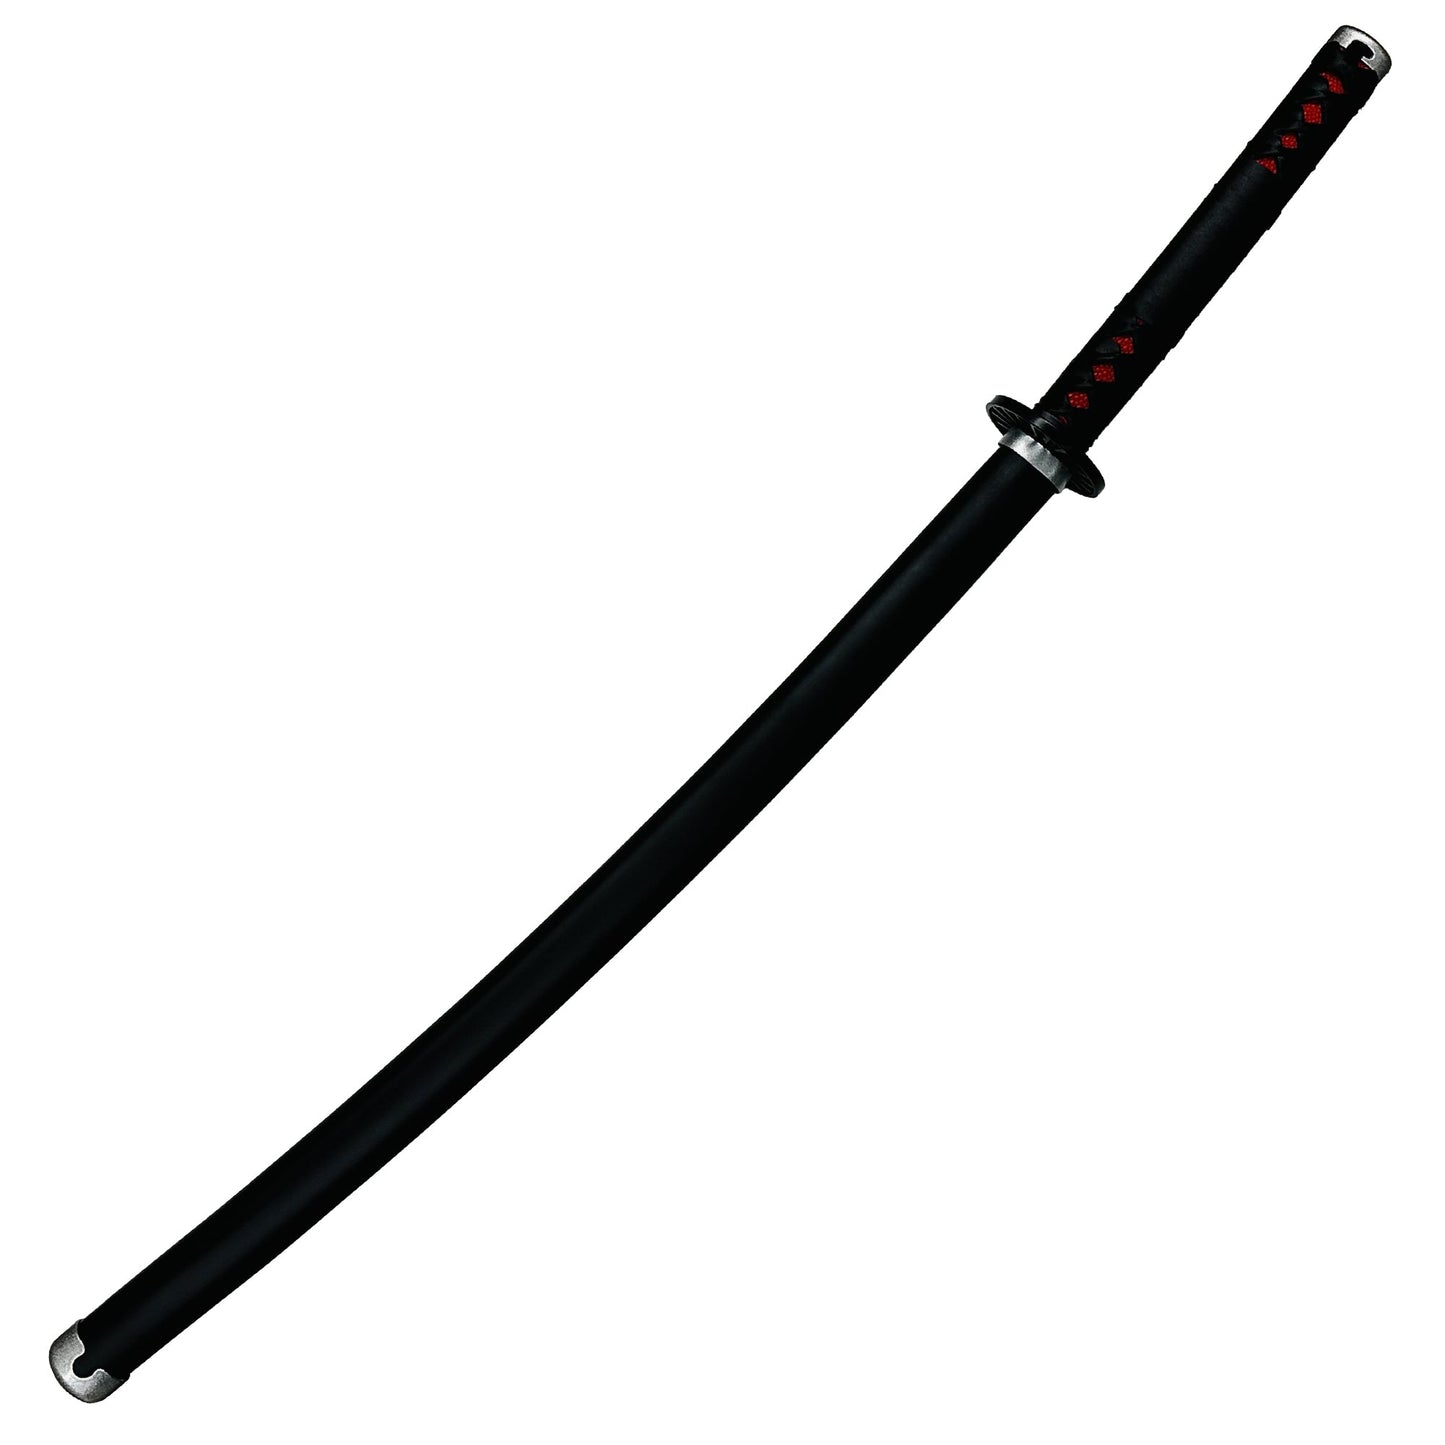 Demon slayer Tanjiro Kamado Nichirin Blade Black Katana Sword-1